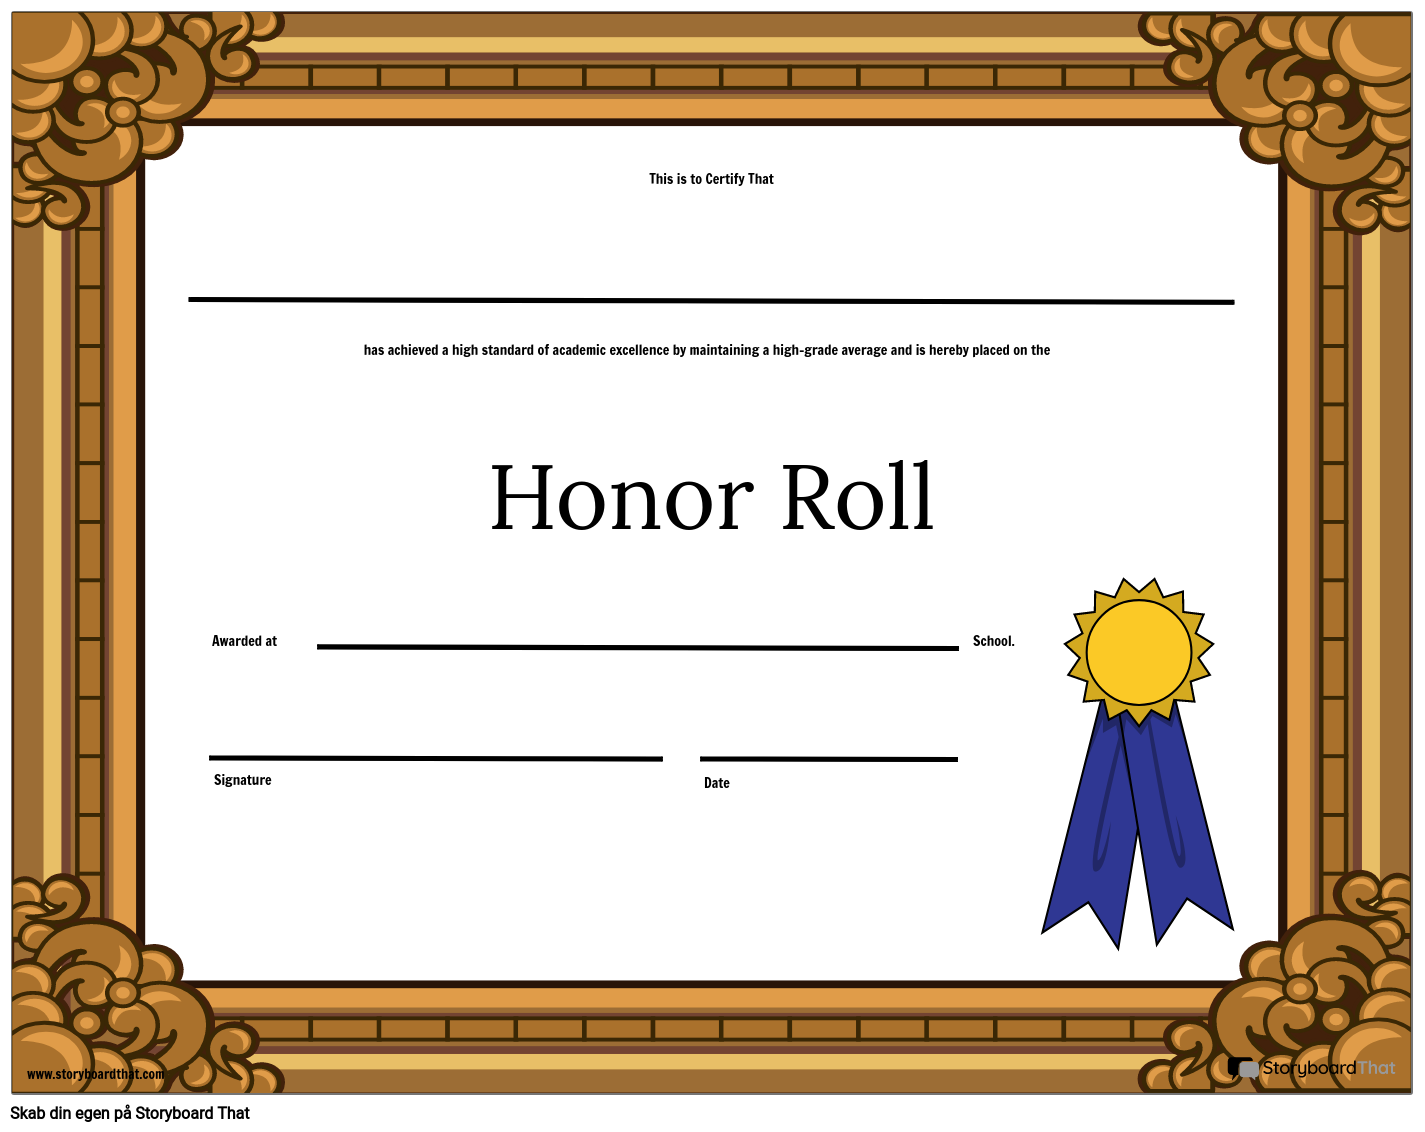 Honor Roll -regnearkskabelon